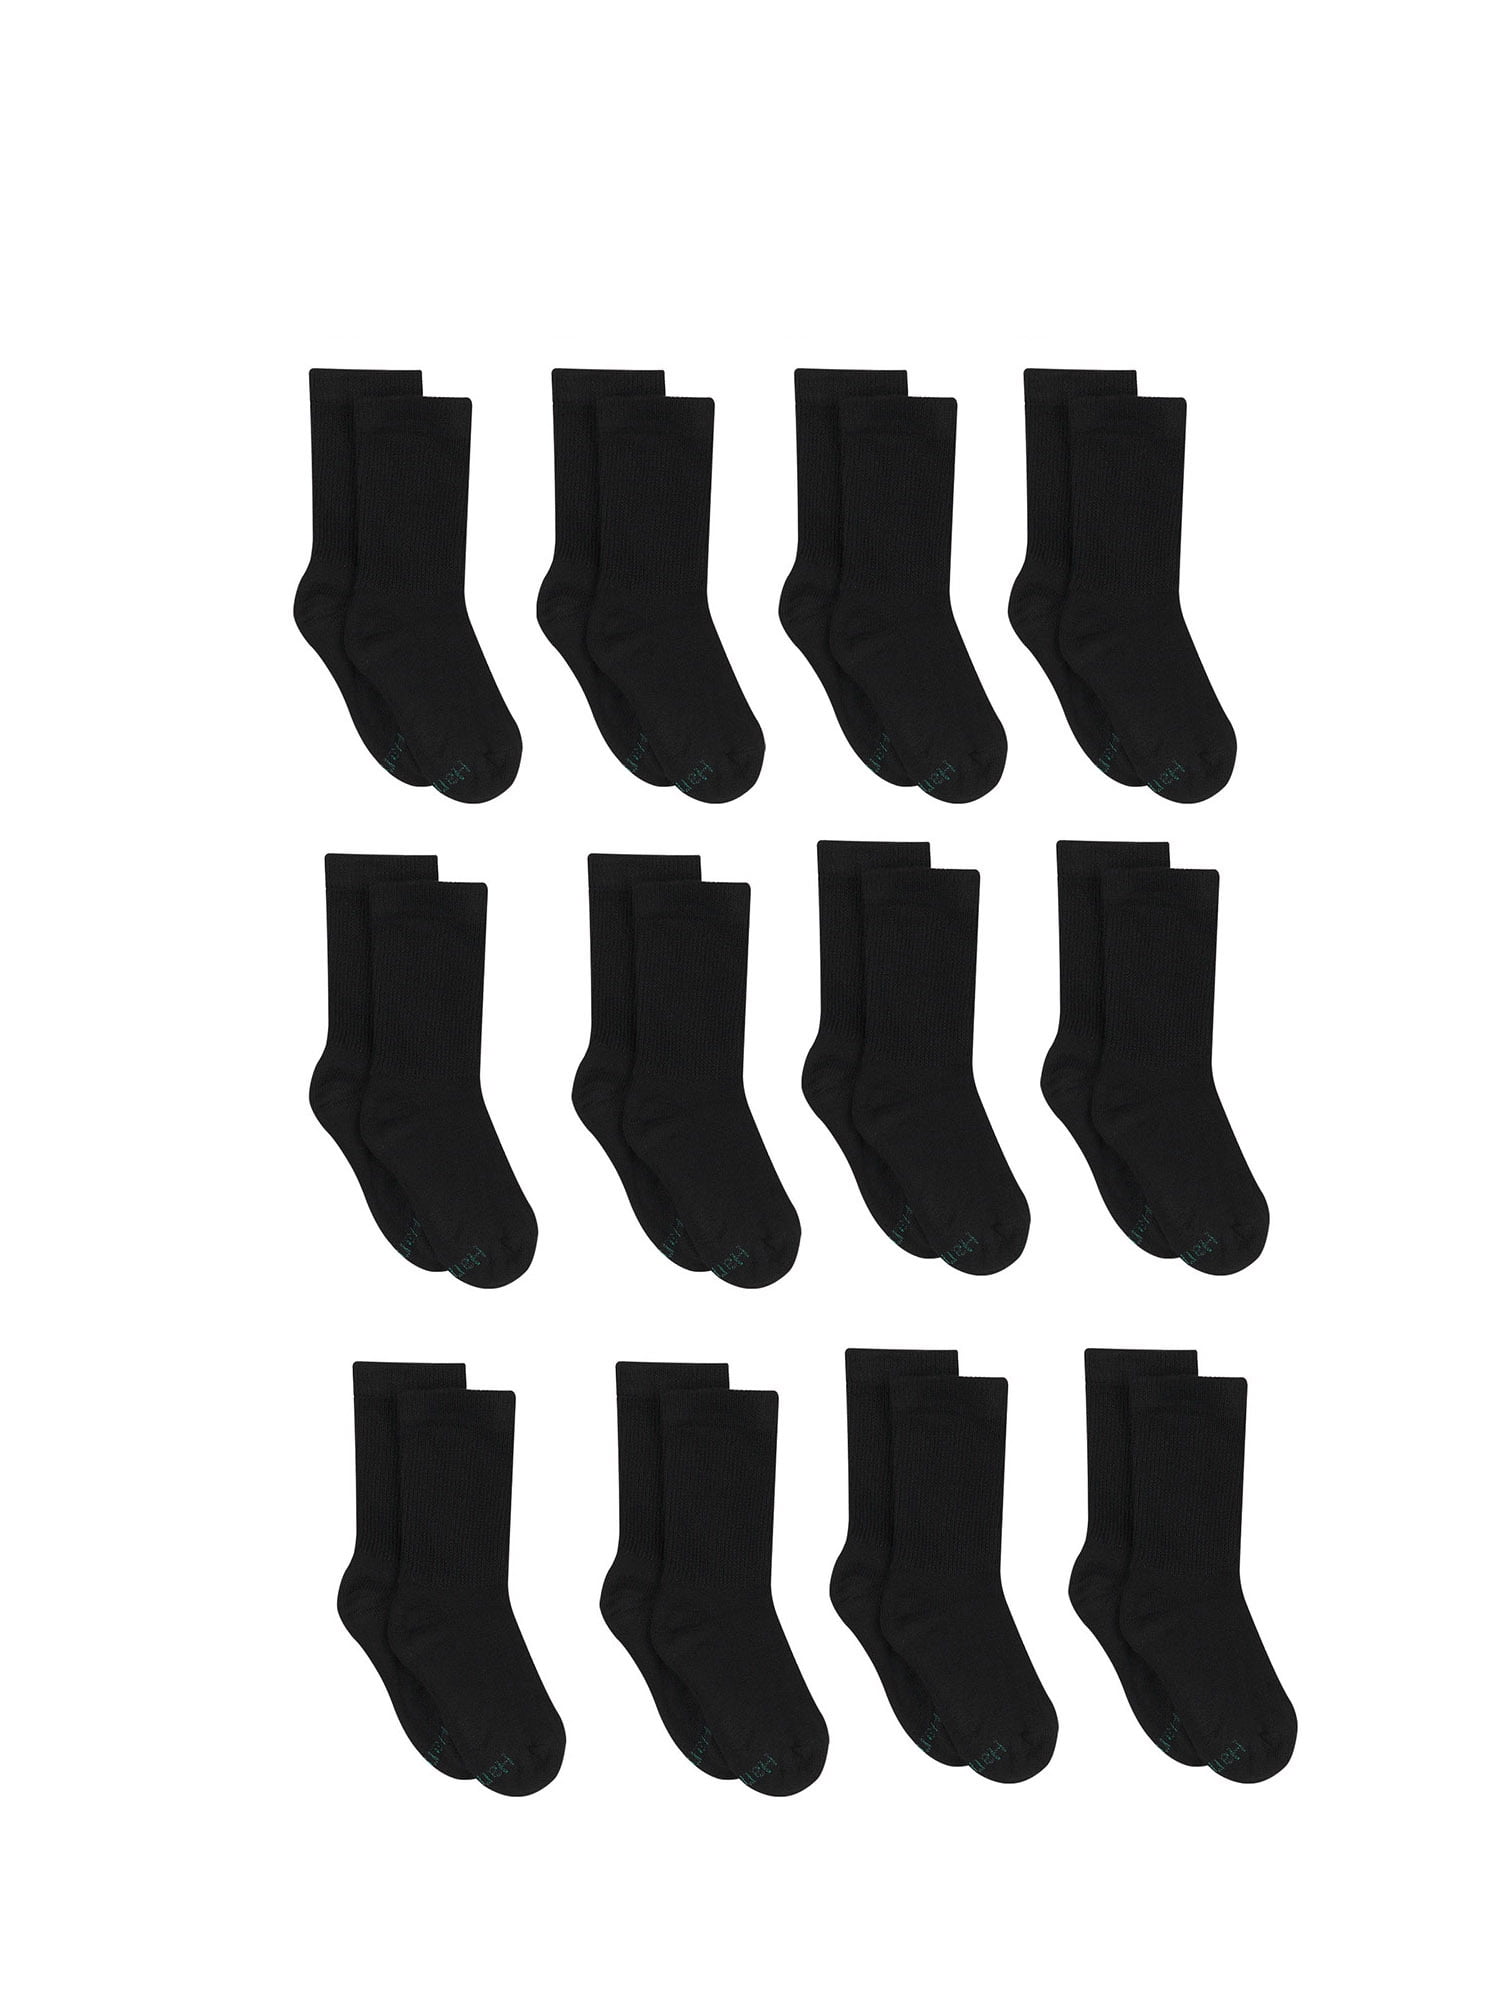 4 12 Kids Cotton Socks Crew High Solid Black Heavy Junior Size 6-8 Unisex School 